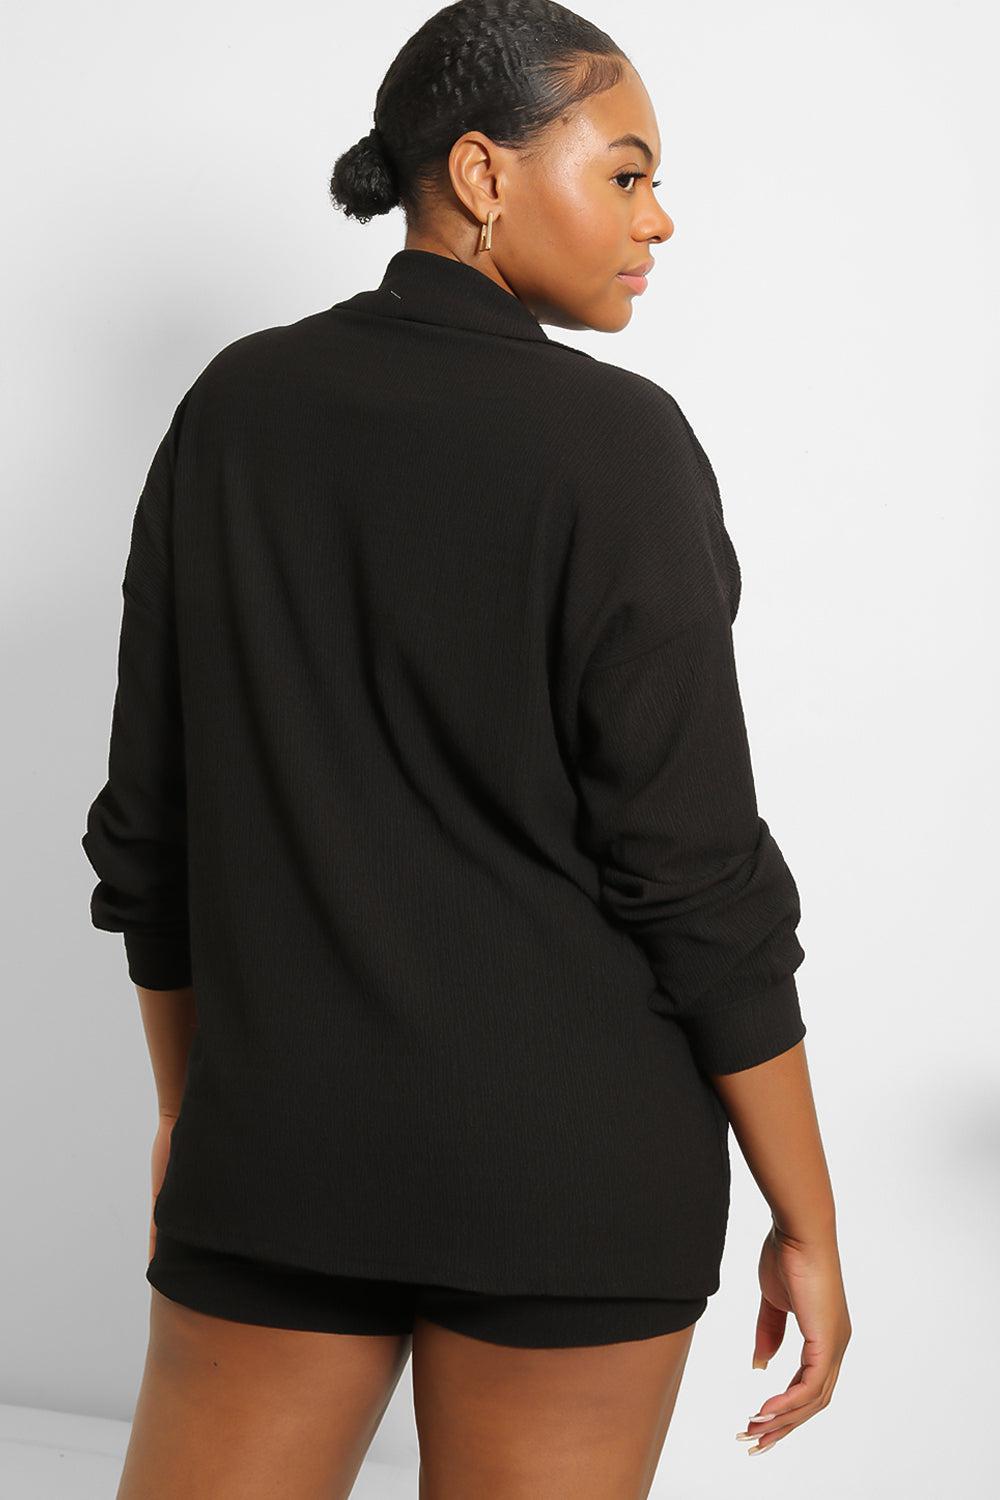 Textured Light Fabric Shirt And Shorts Set-SinglePrice